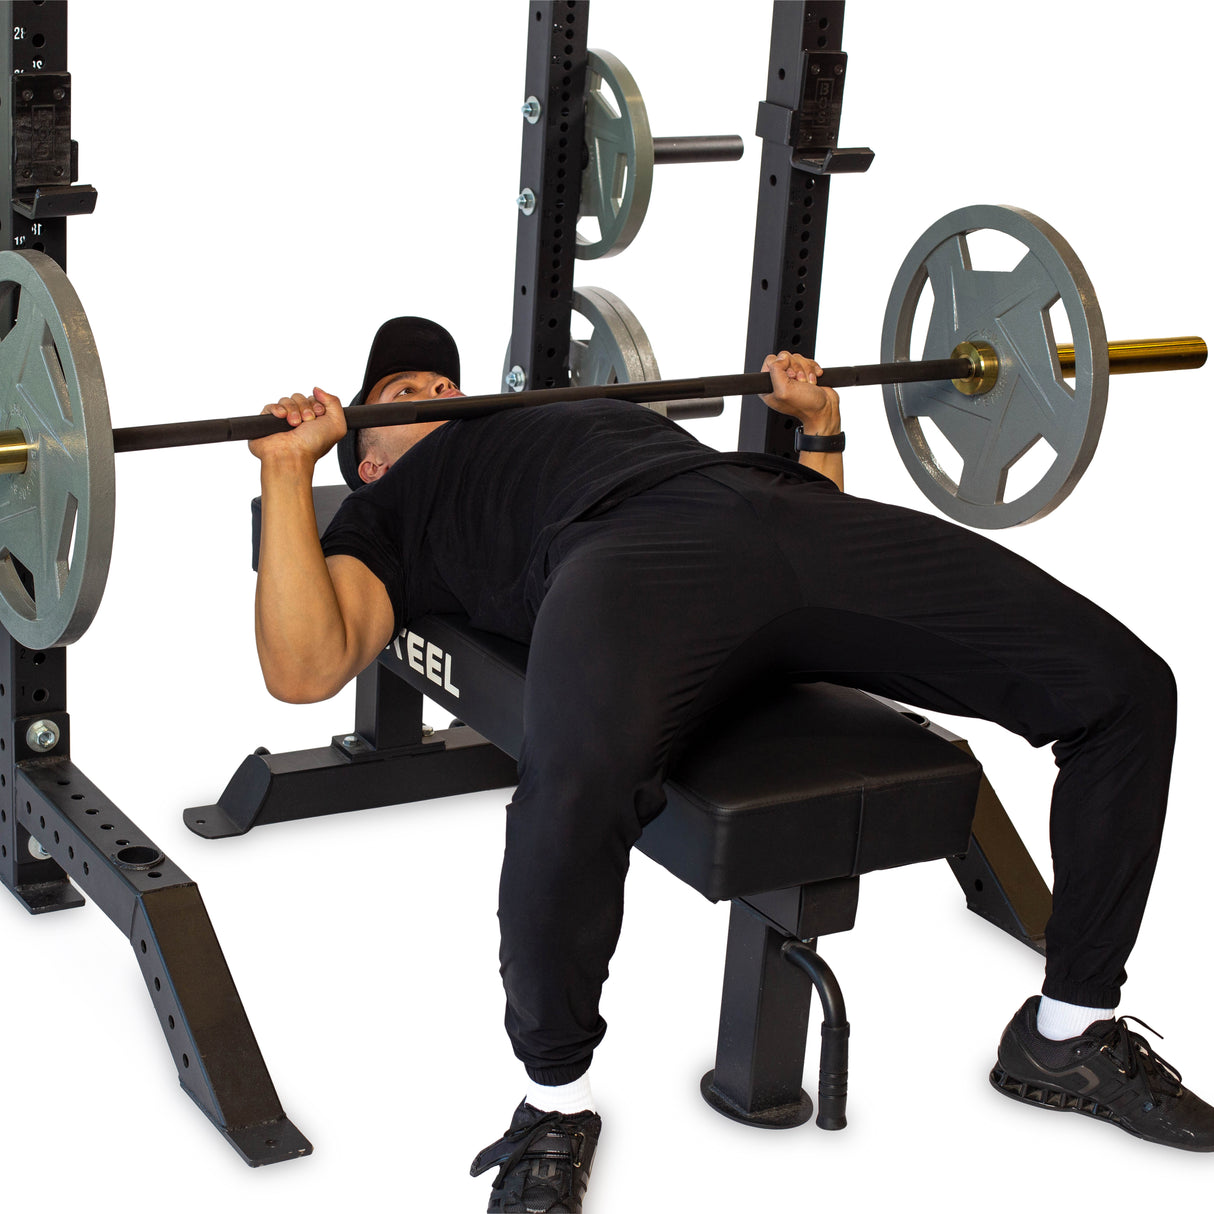 Male athlete doing bench press with Hydra Collegiate Power Rack PREBUILT focus